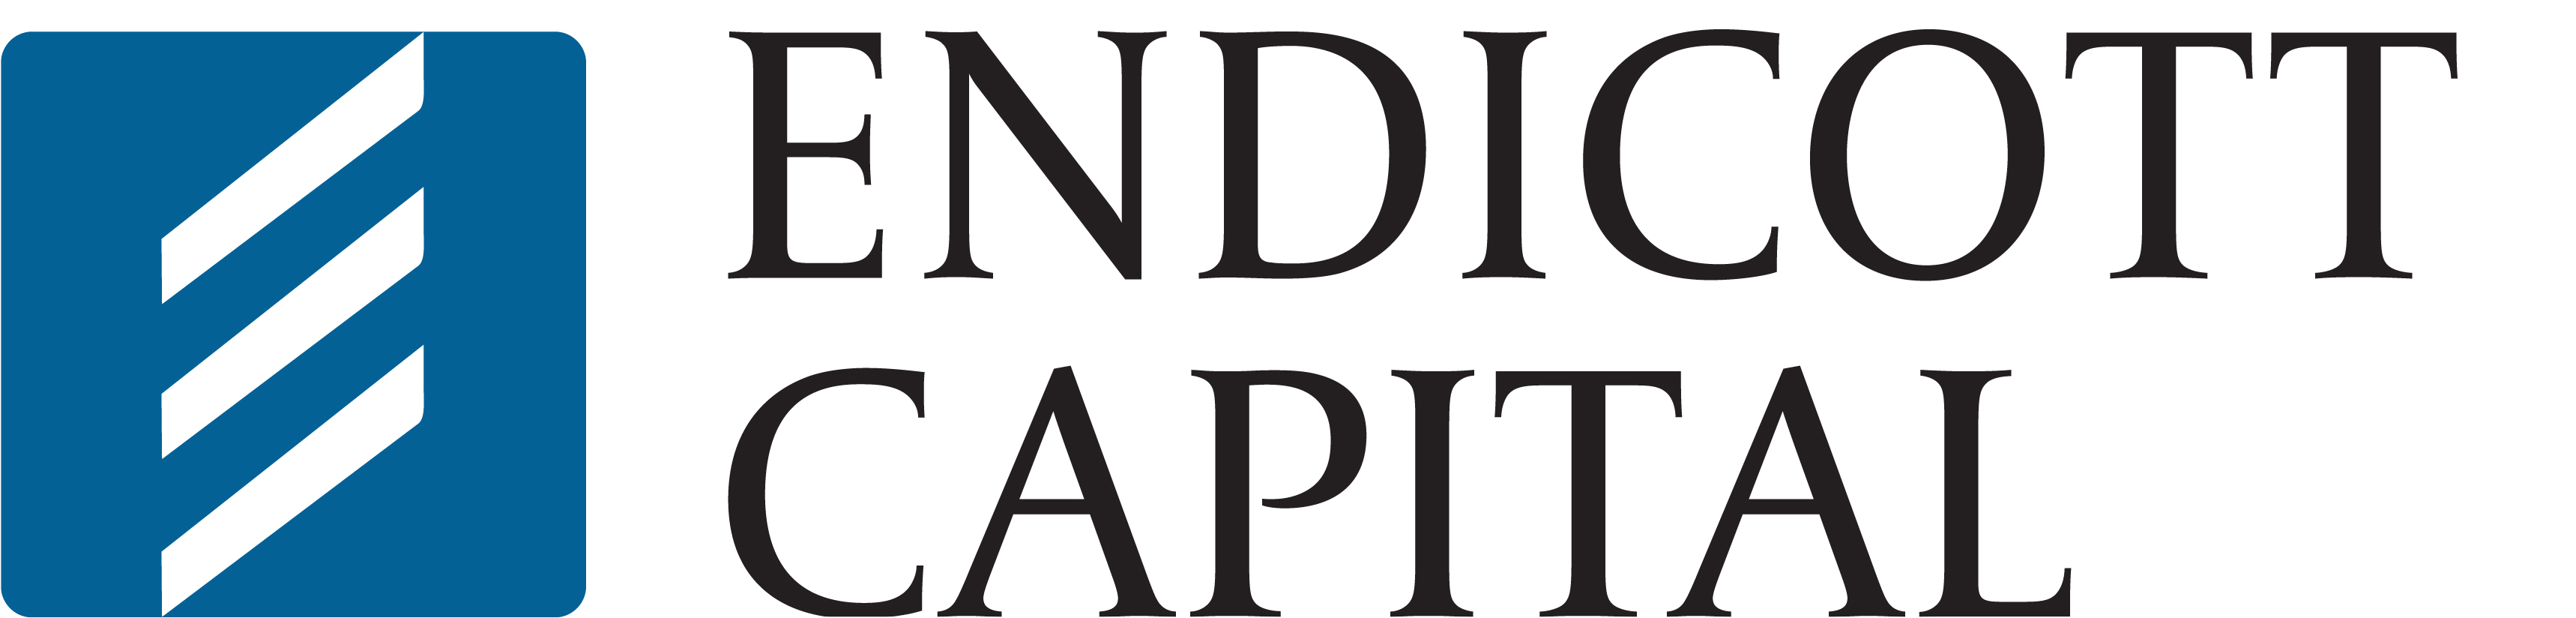 Endicott Capital Logo